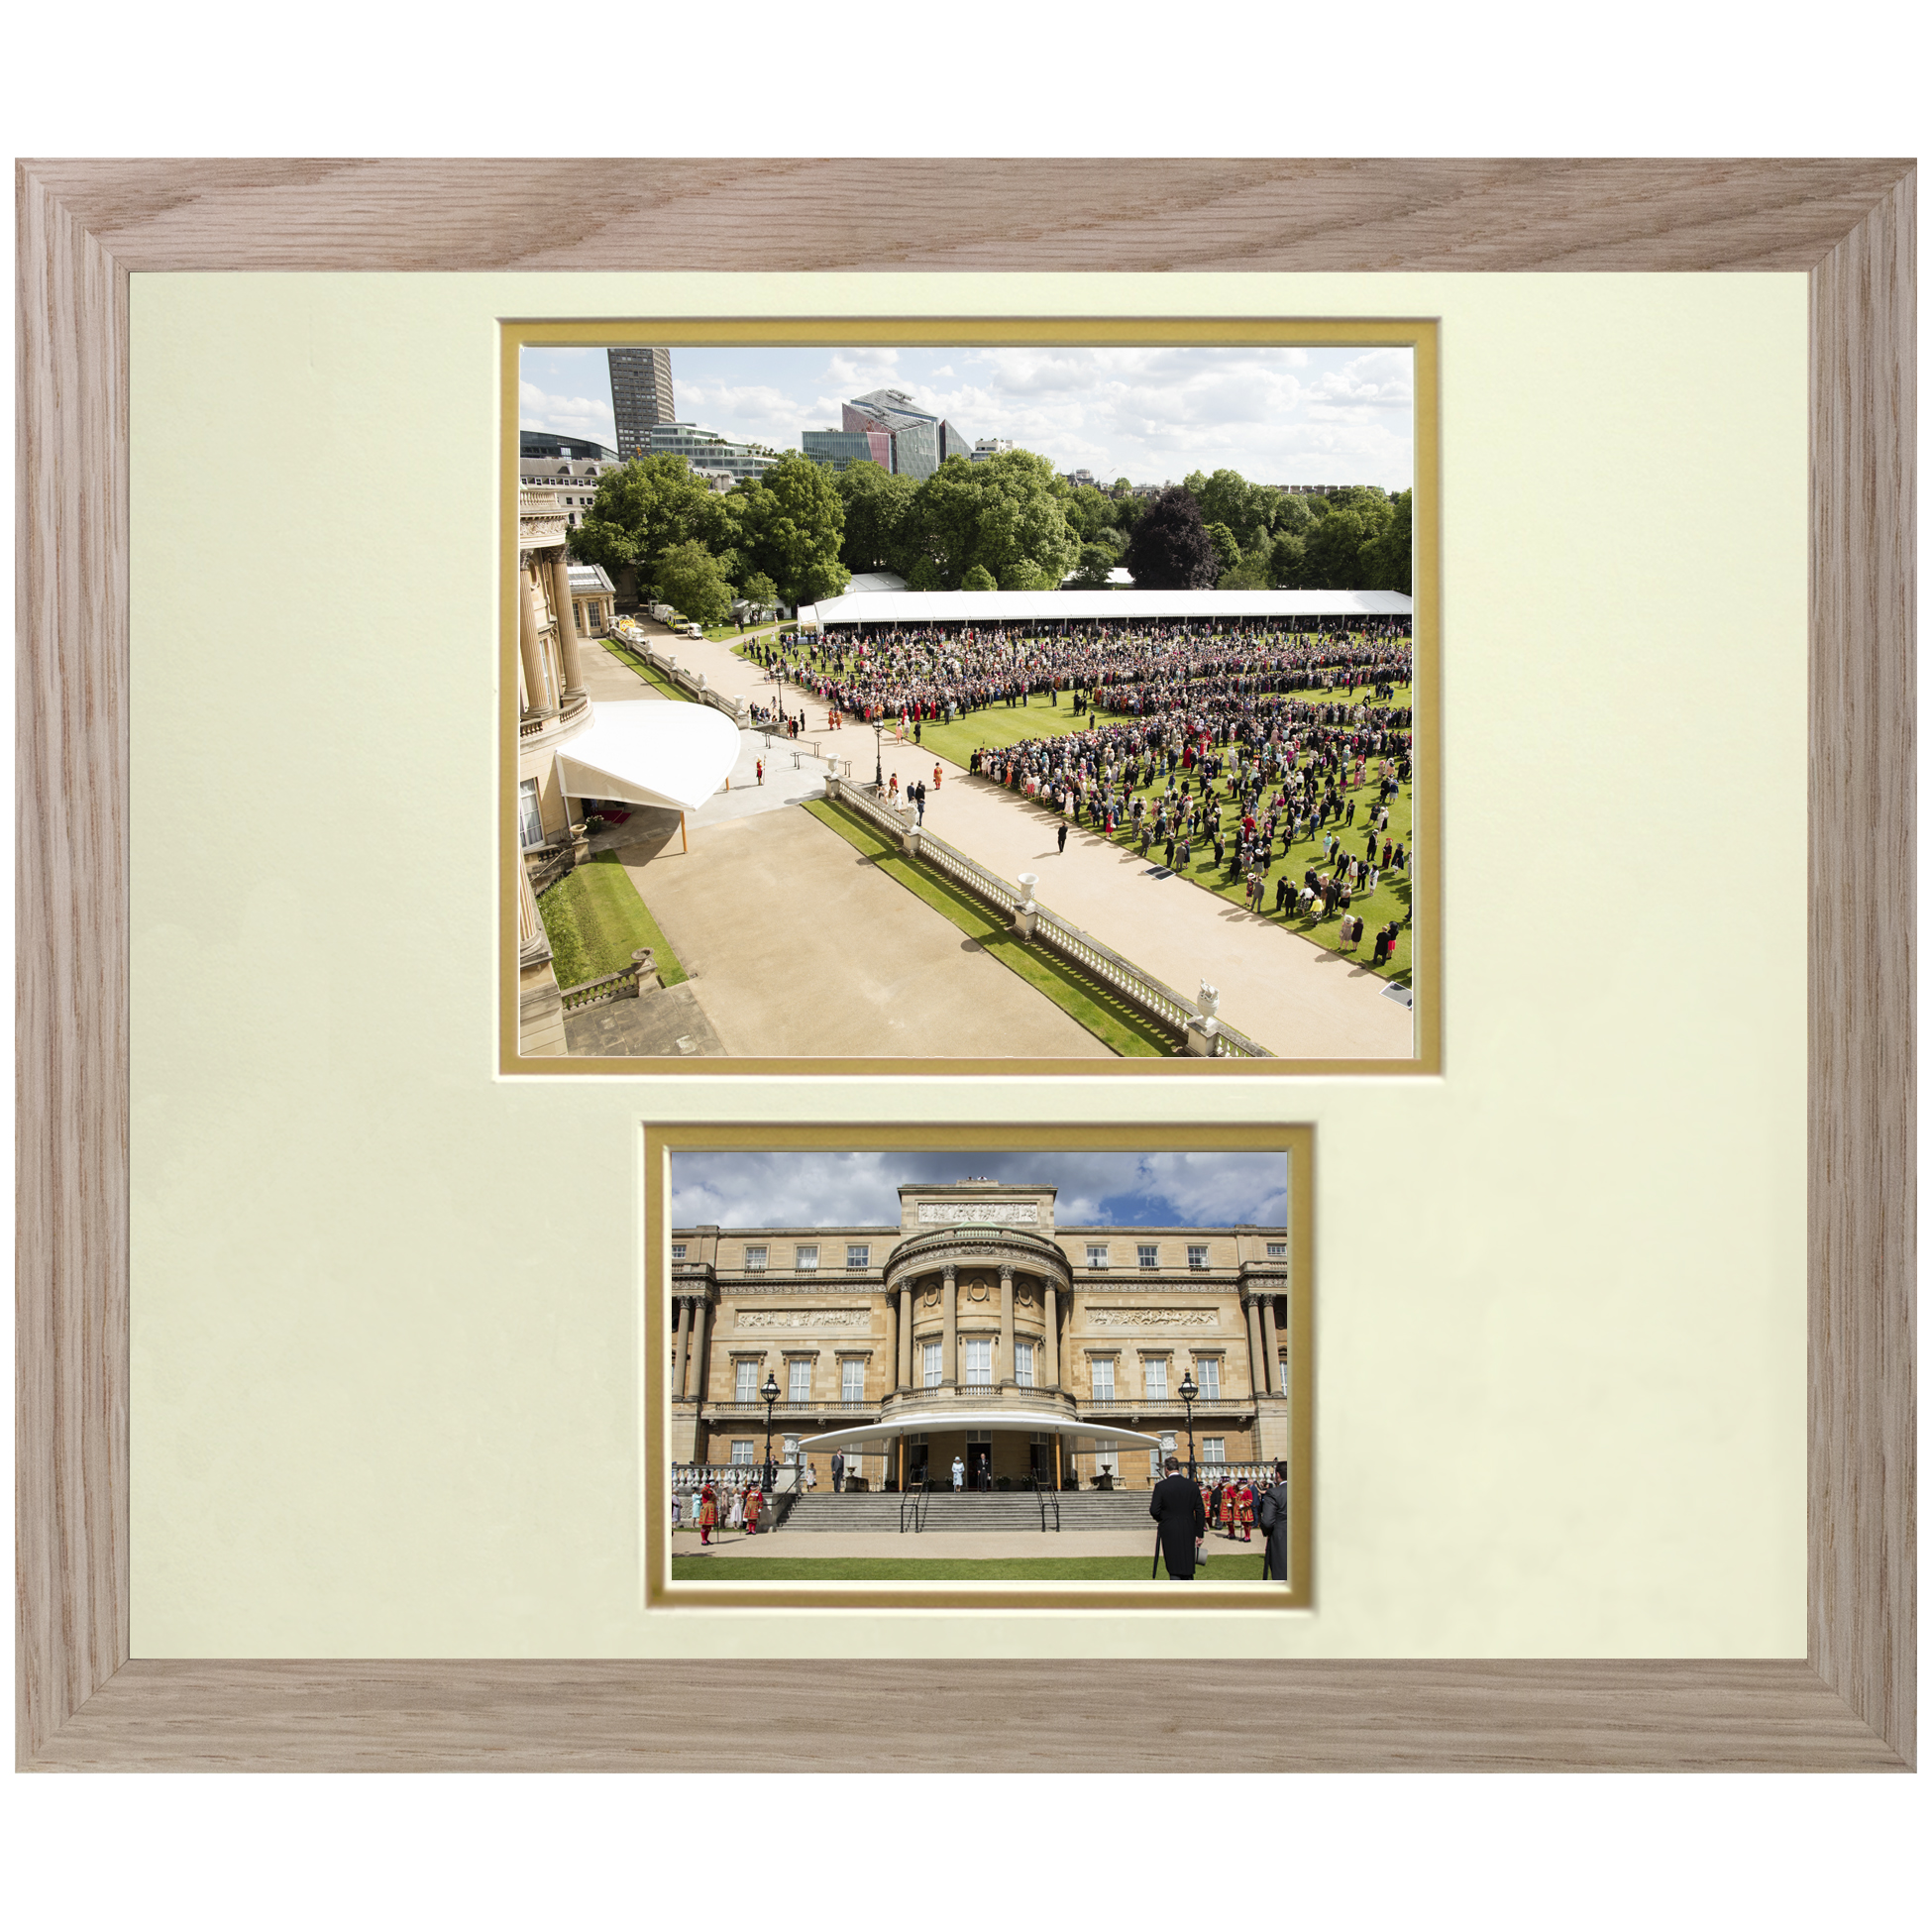 Commemorative 2017 Royal Garden Party Framed Photograph